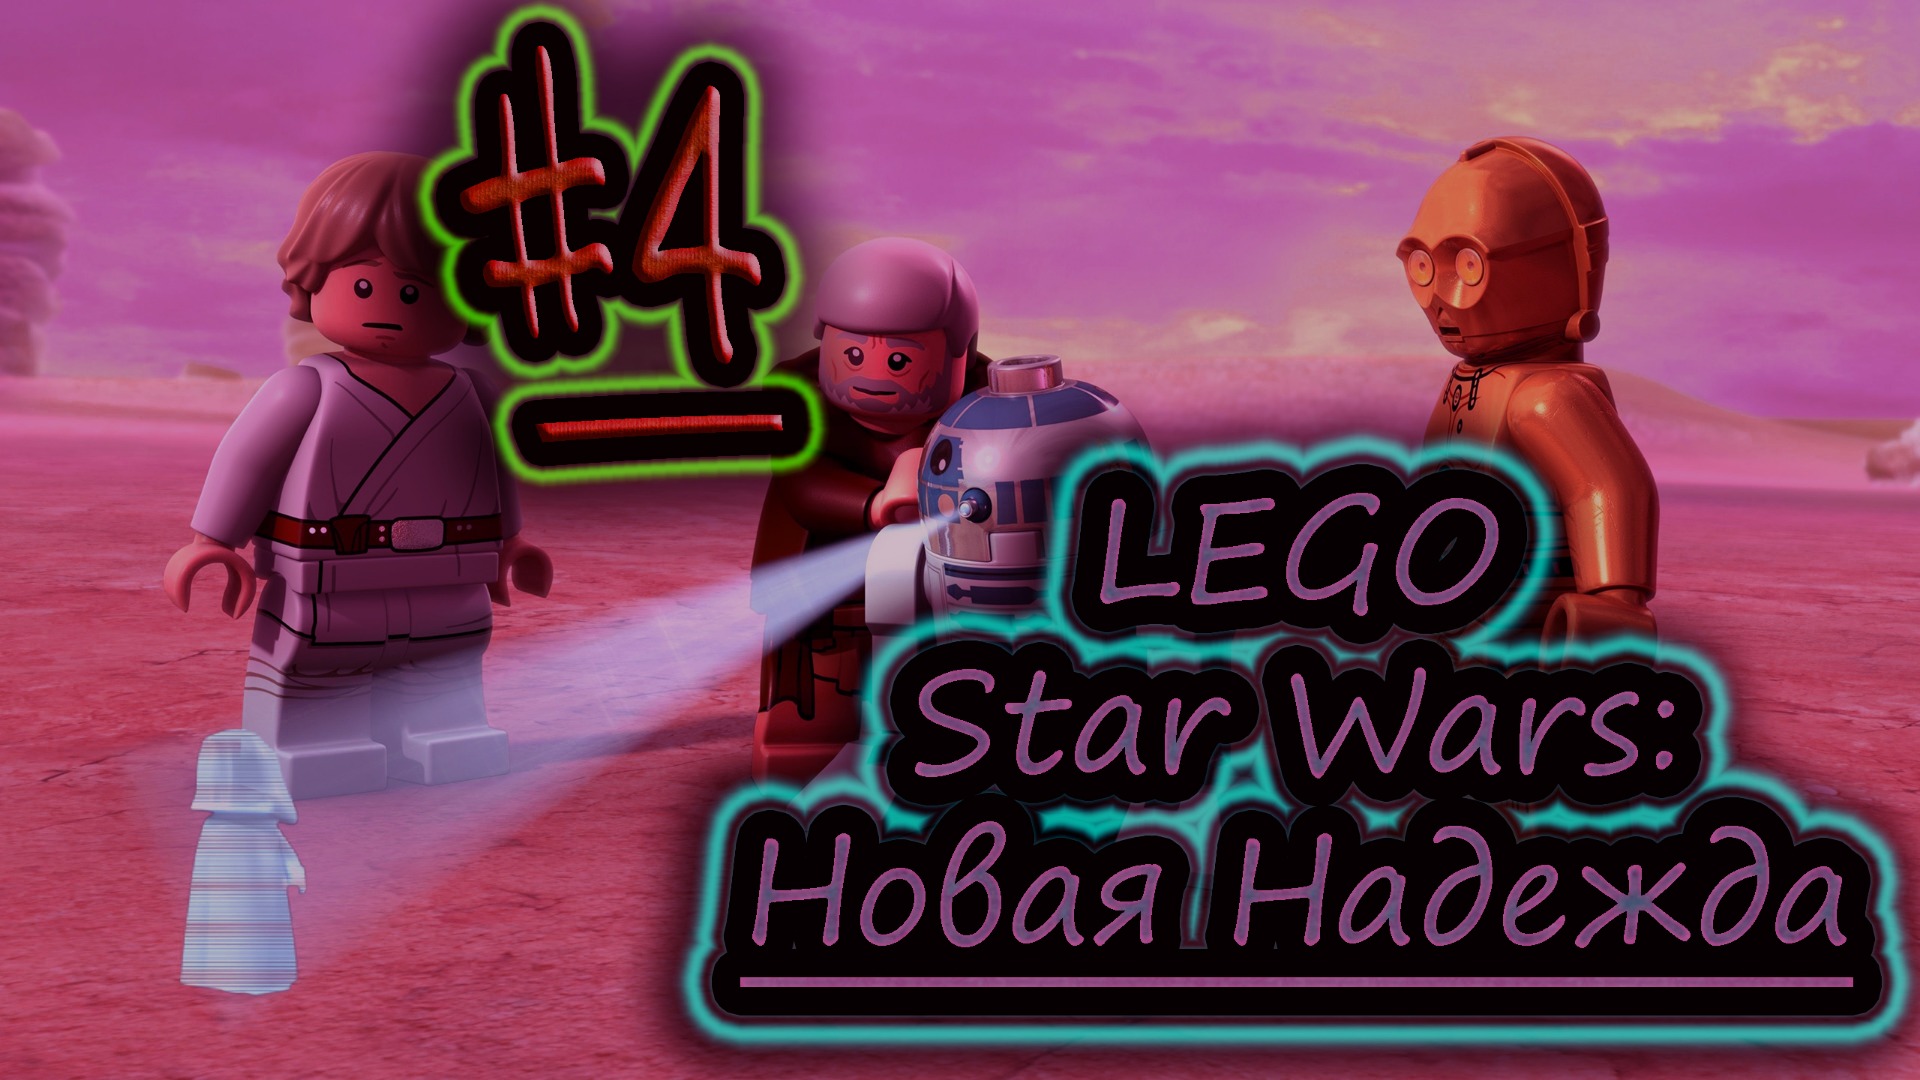 КВАДРАТНАЯ НАДЕЖДА ✔ LEGO Star Wars Skywalker Saga #4